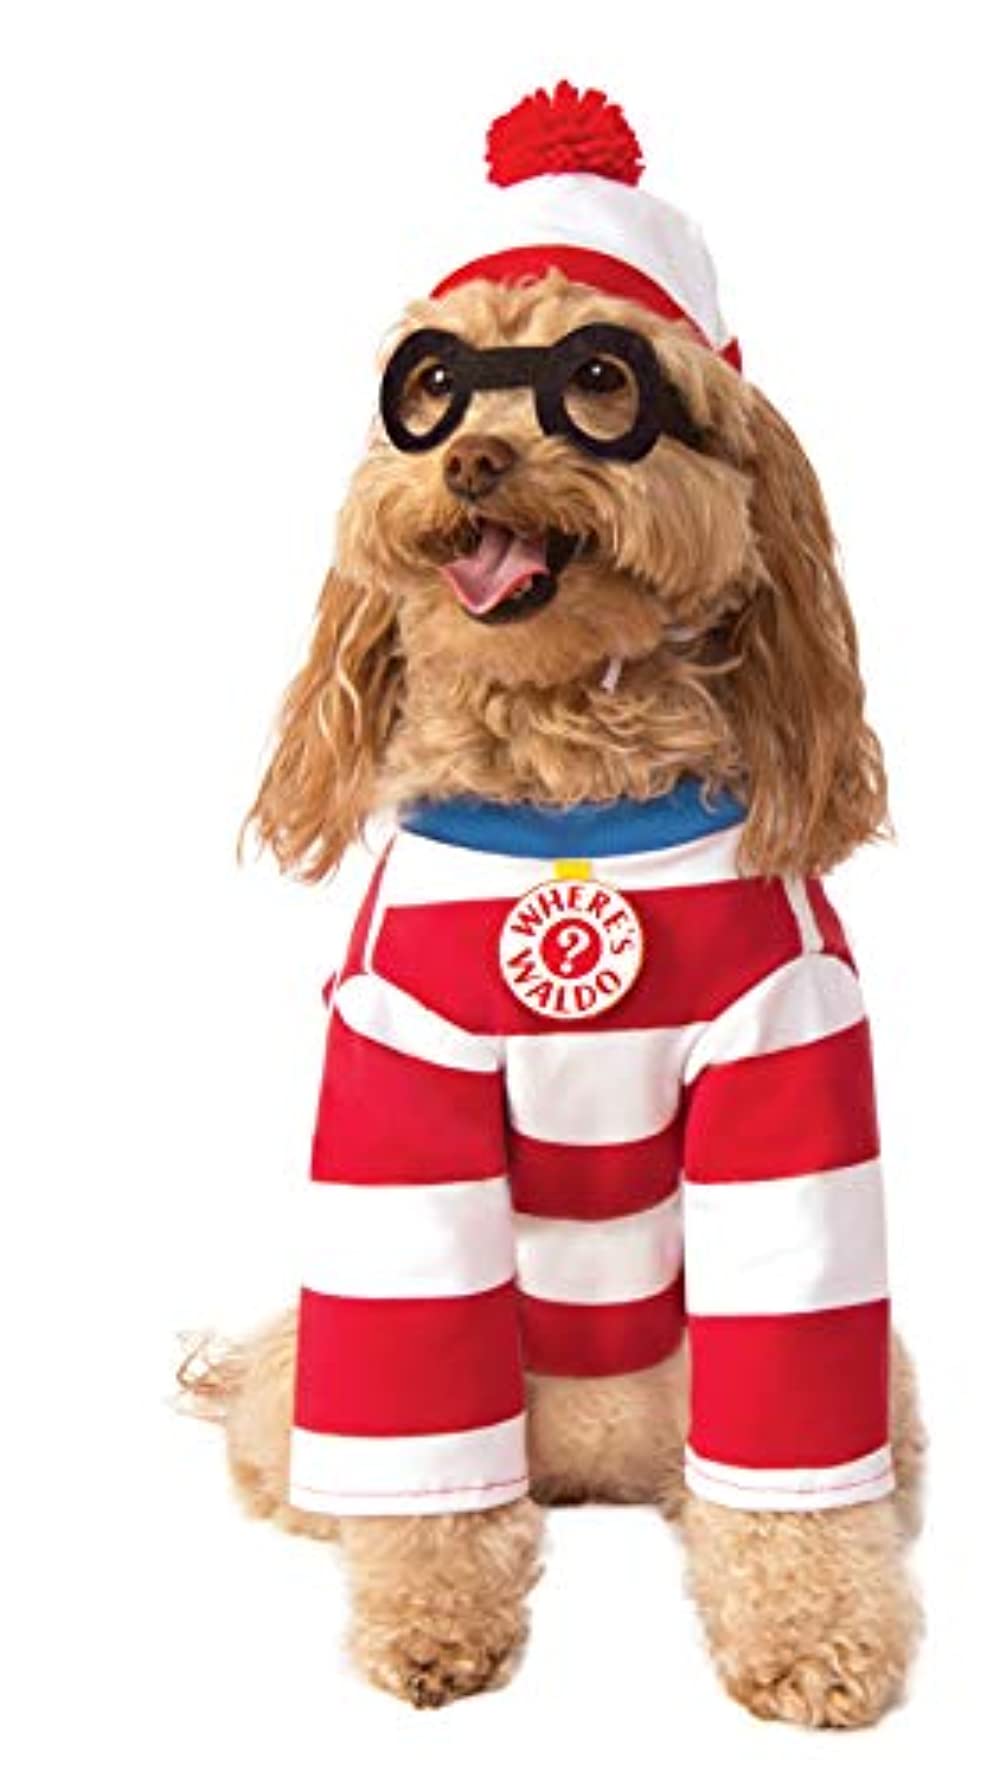 Where's Waldo Woof Dog Halloween Costume - image 2 of 4